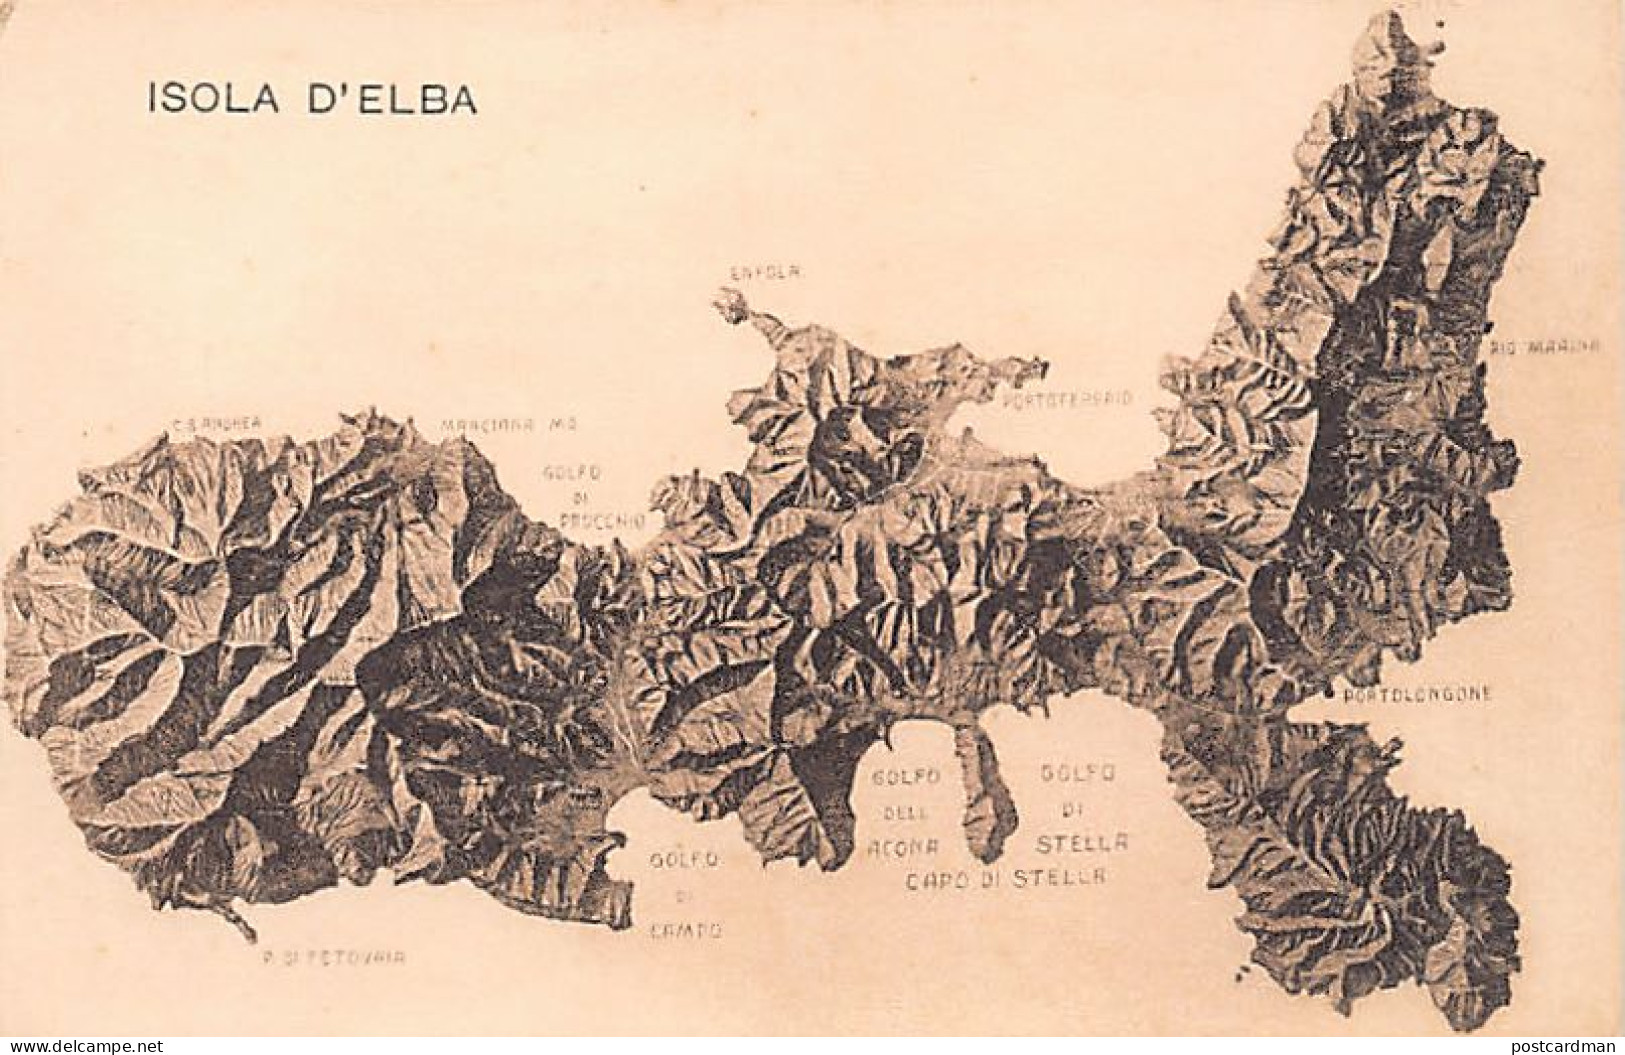  Isola D'Elba (LI) Cartina Geografica - Livorno